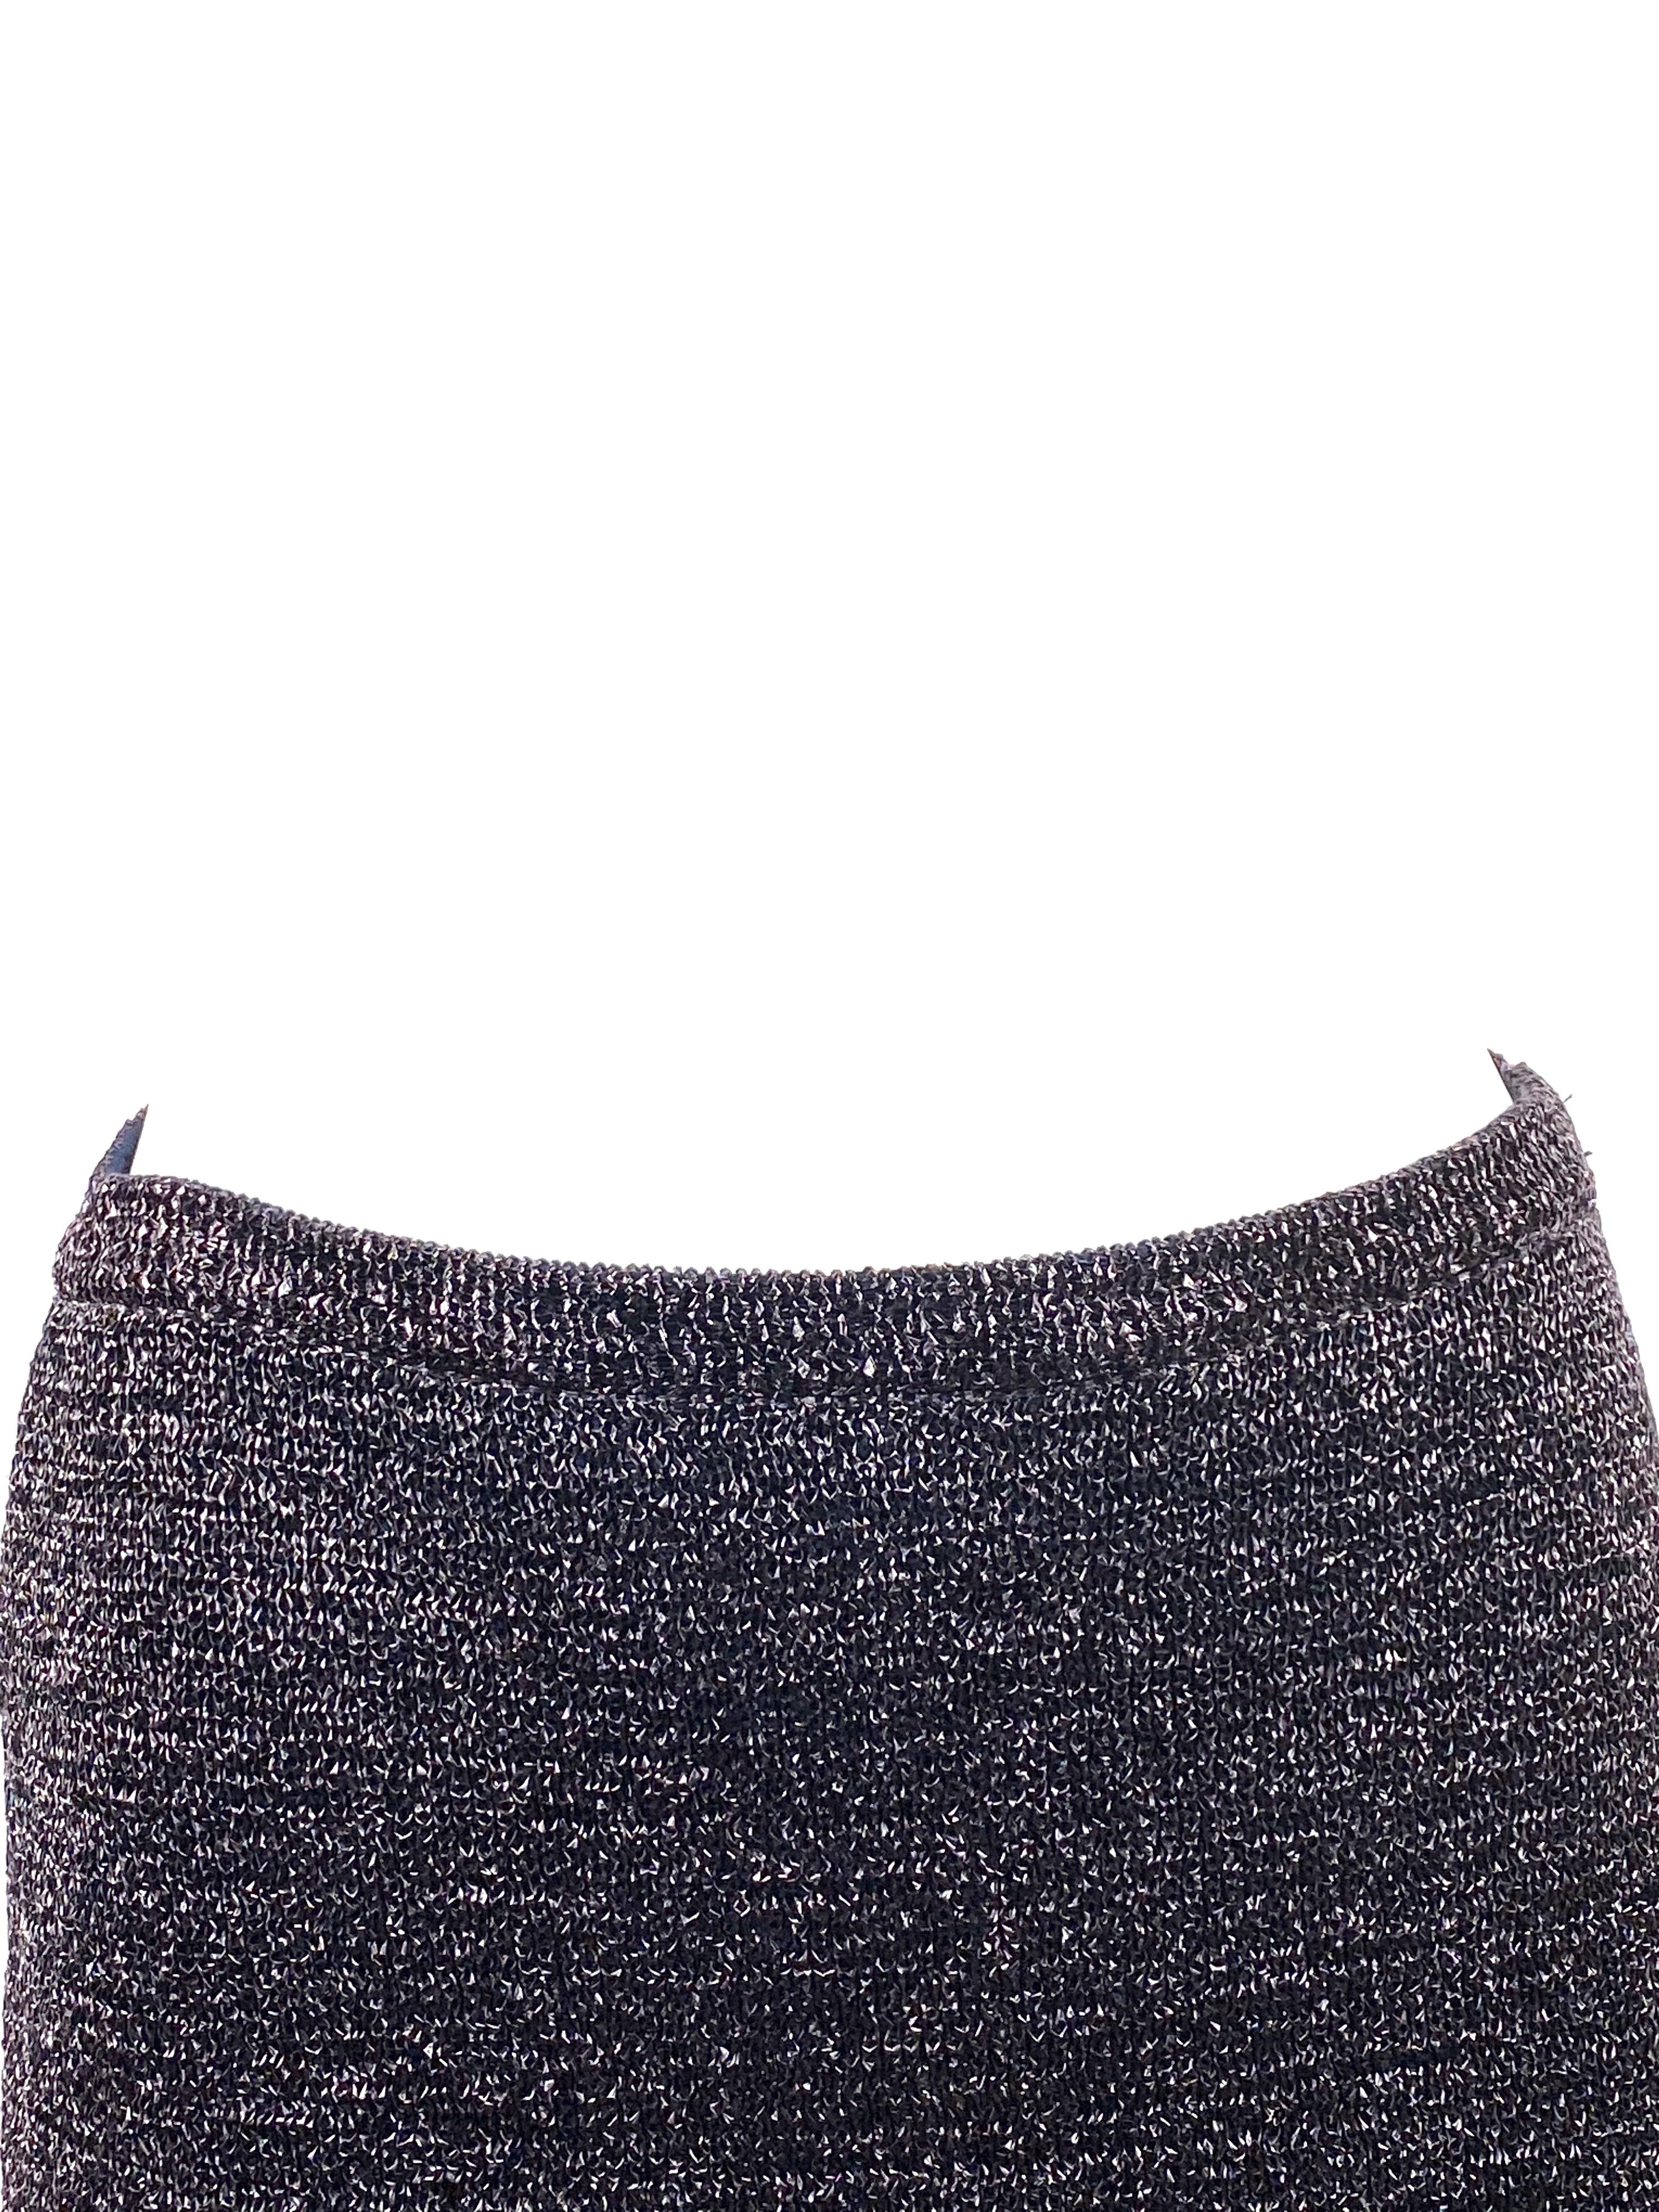 Women's or Men's Christian Dior Knit Navy Metallic Crop Top w/ Pencil Skirt Set